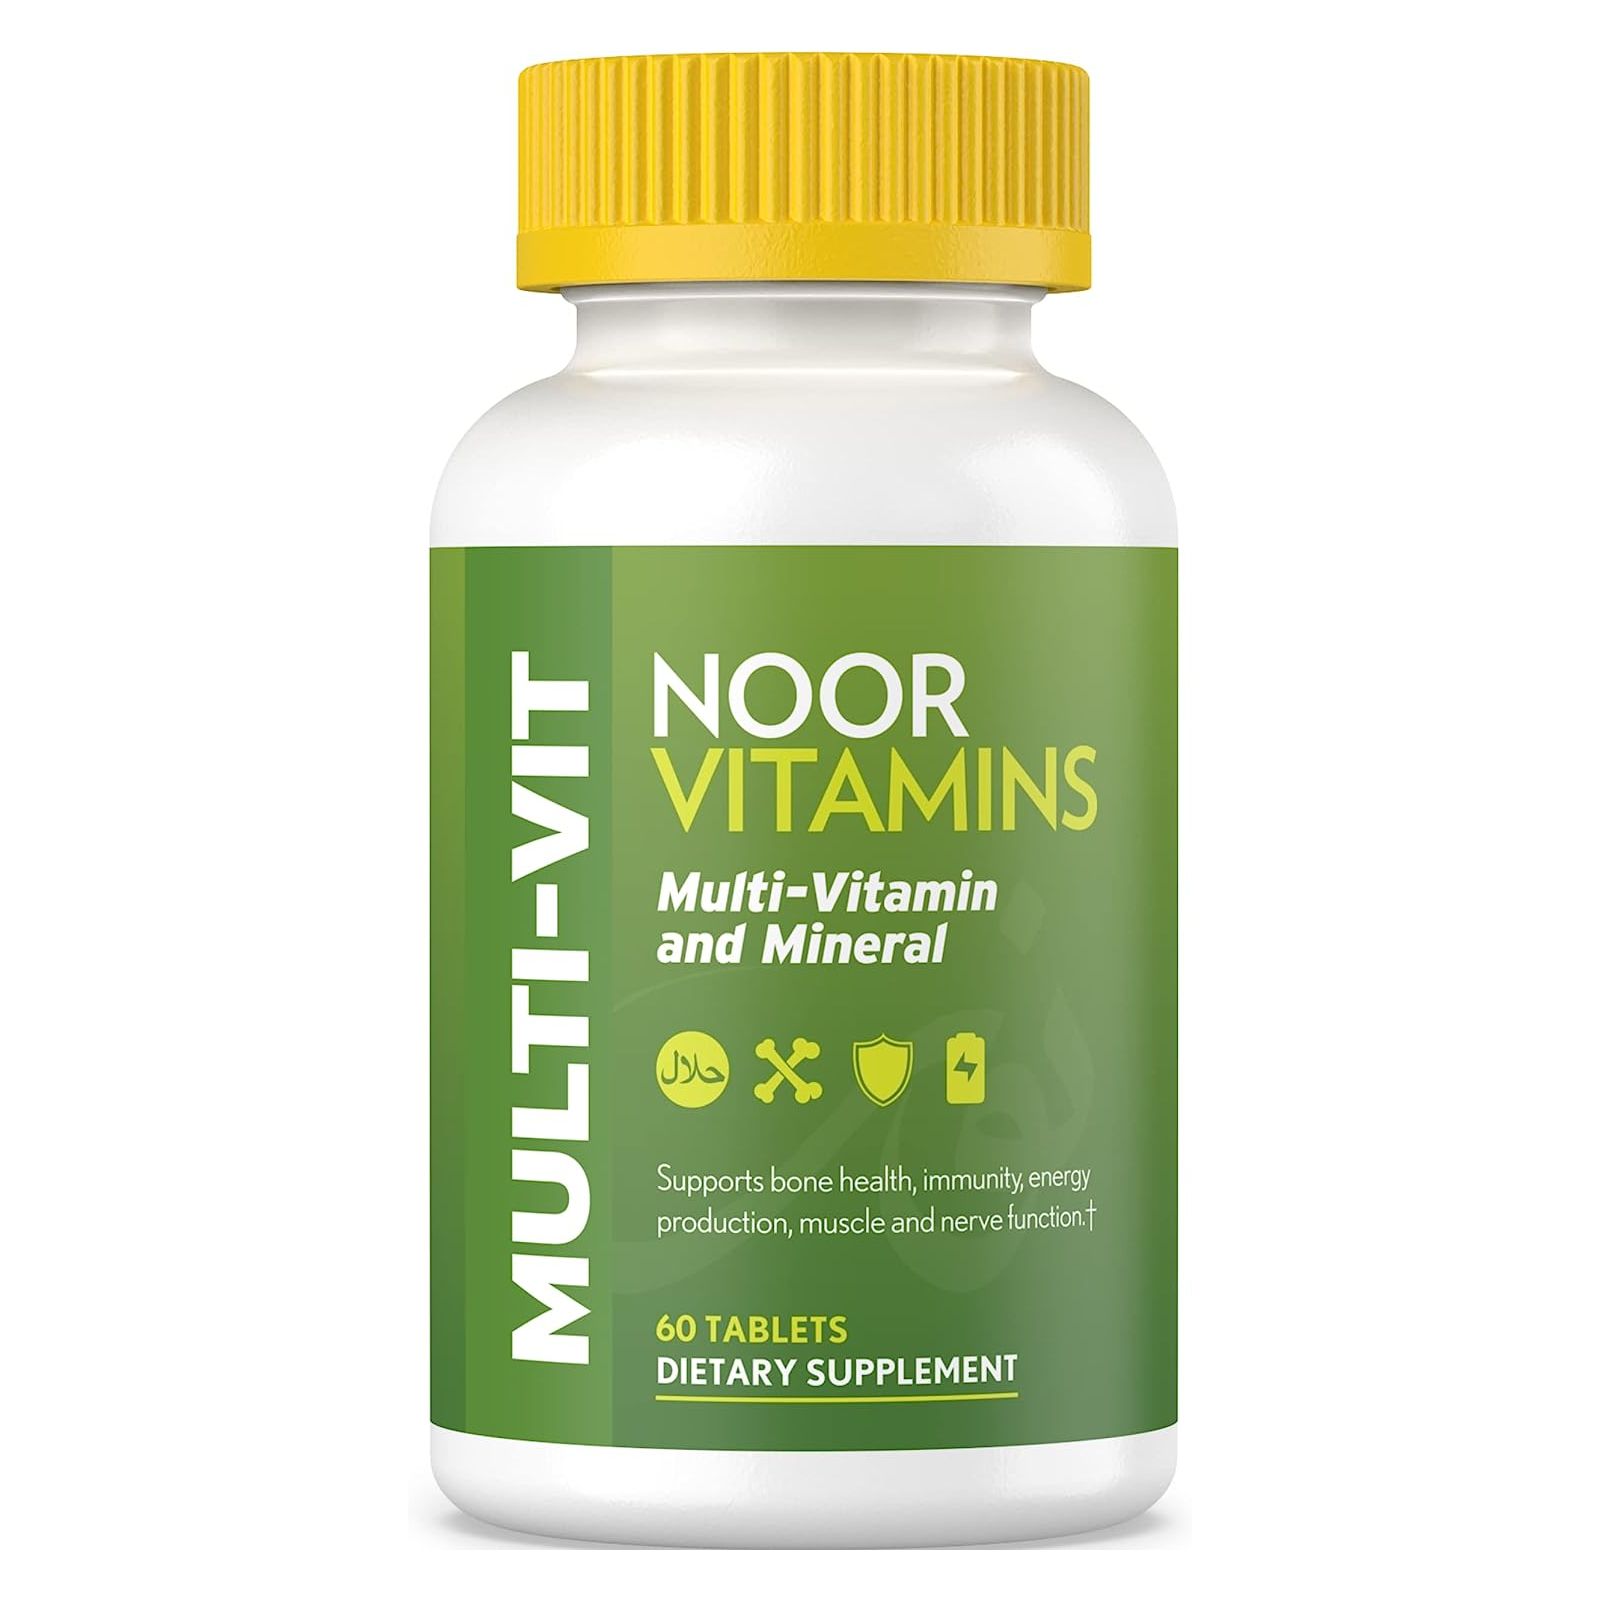 Мультивитамины Noor Vitamins Halal Daily, 60 таблеток цена и фото